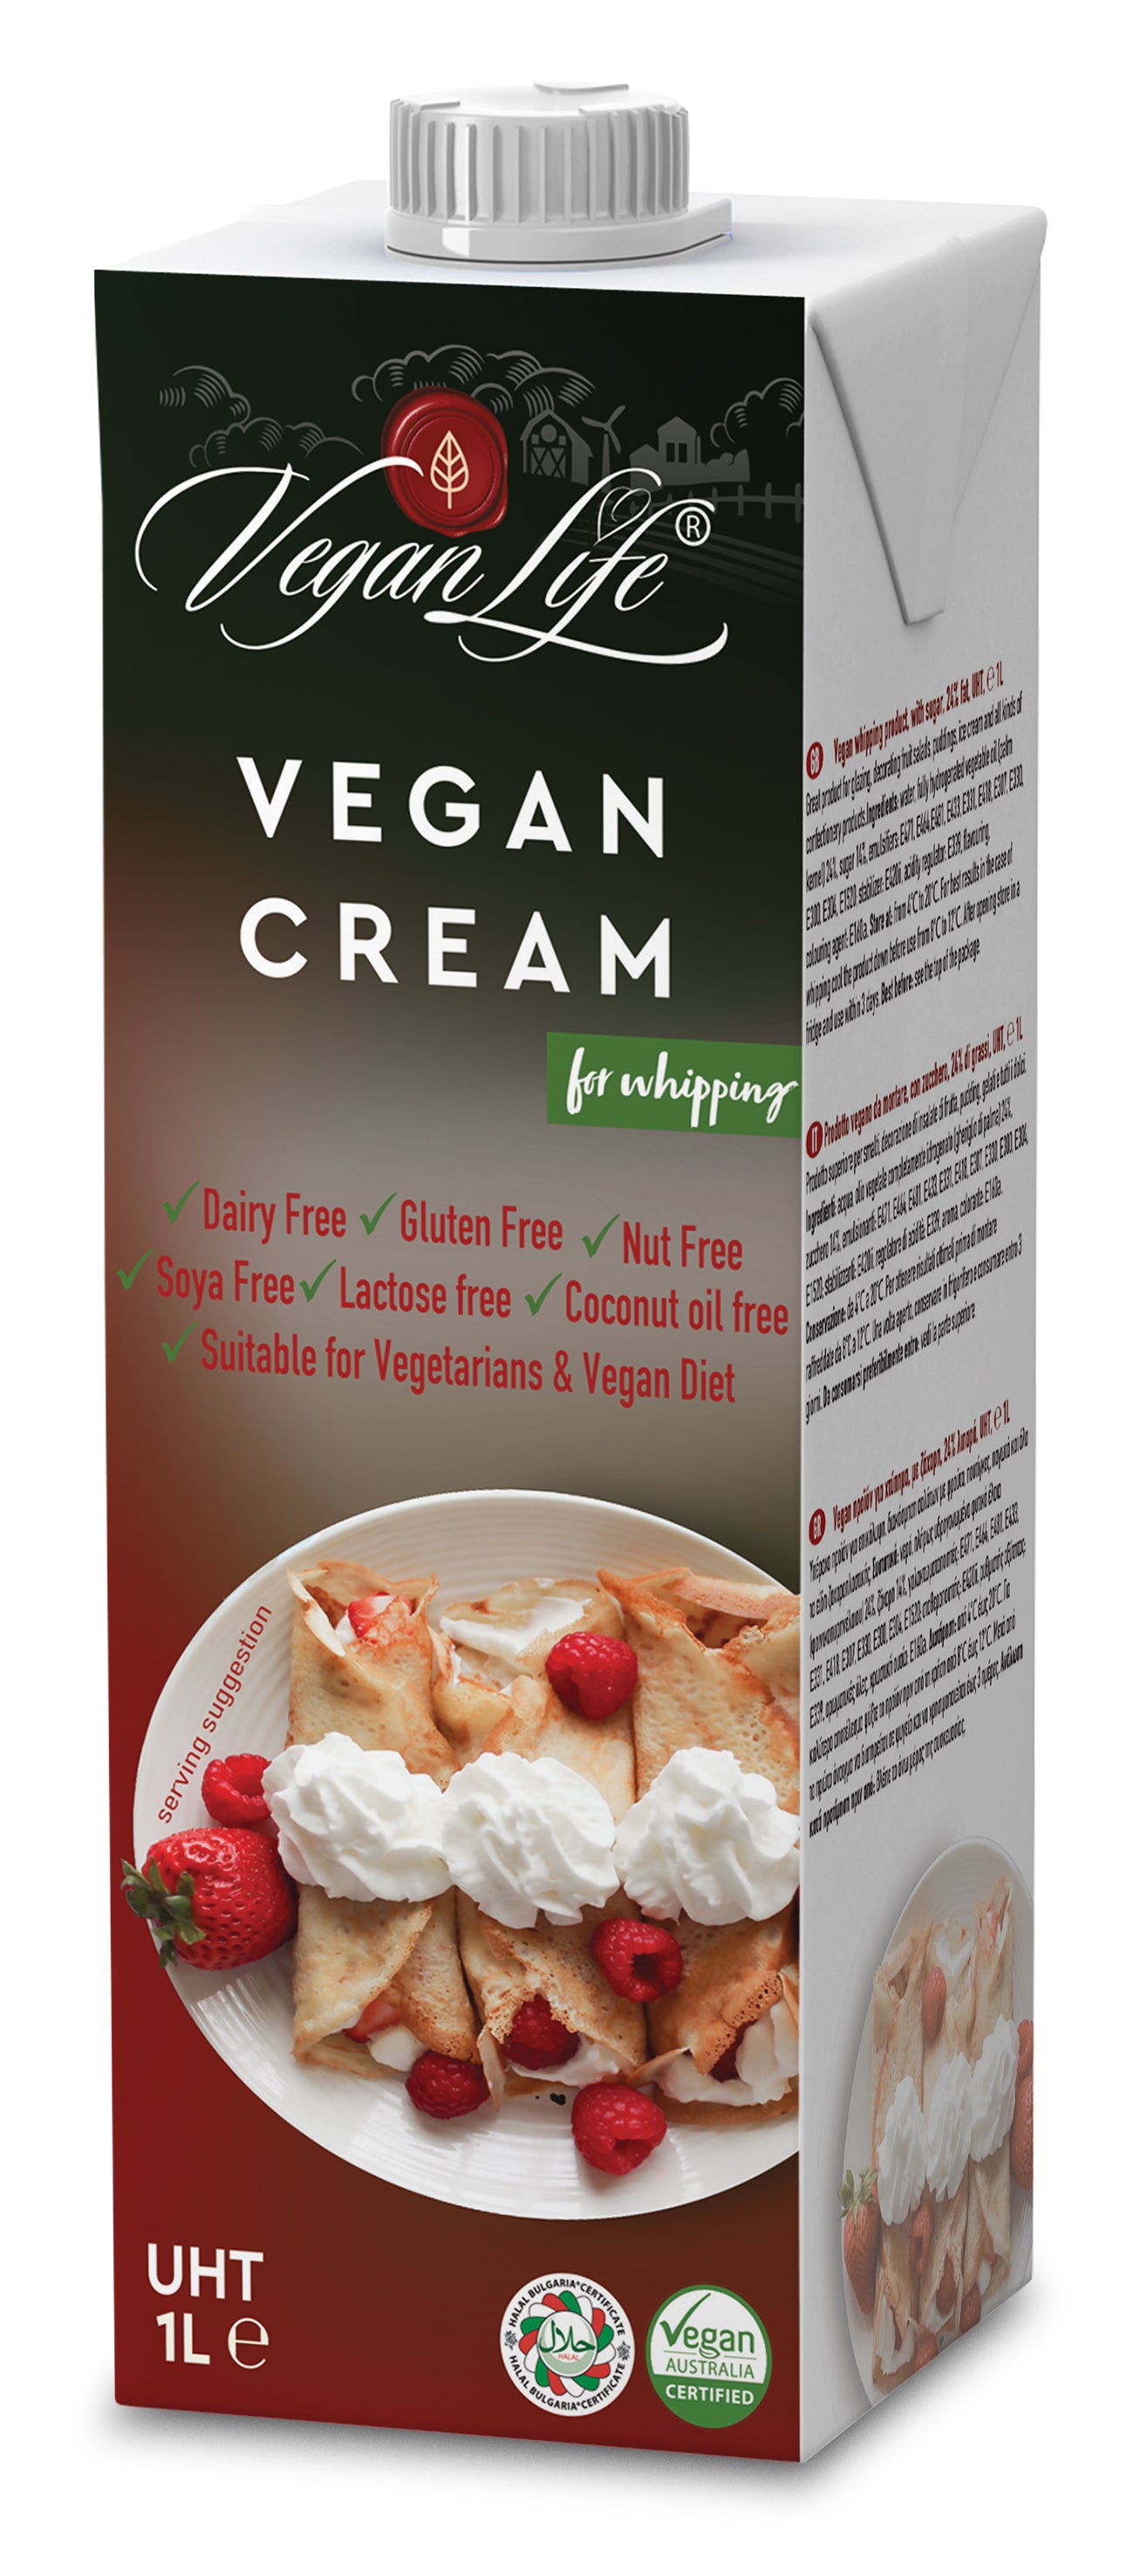 Vegan Life Whipping Vegan Cream